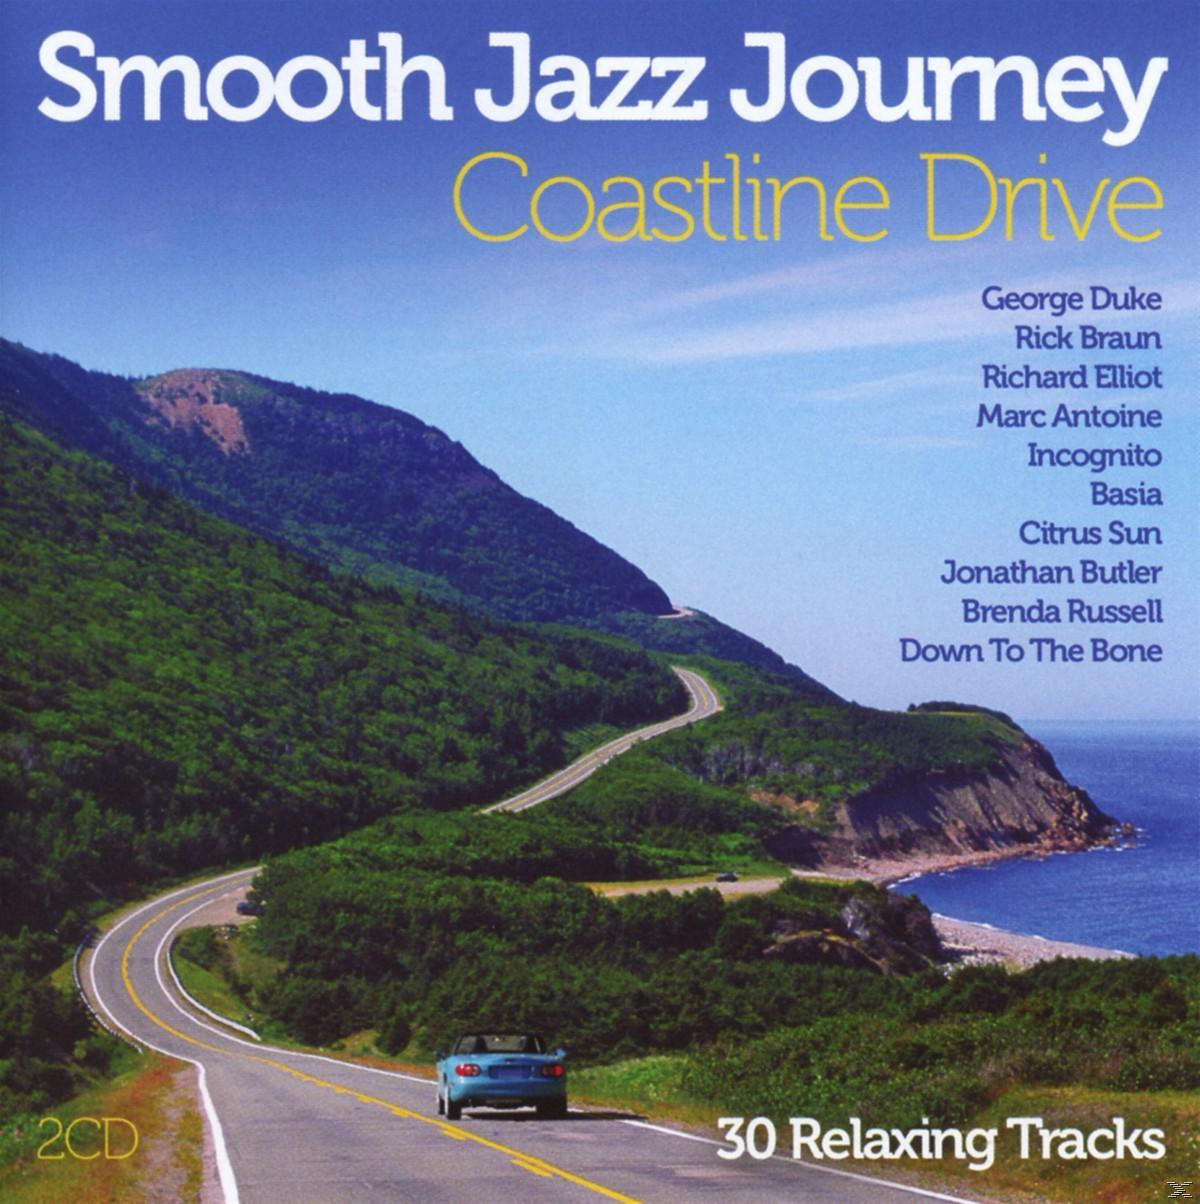 Journey: Drive (CD) - Coastline VARIOUS Jazz Smooth -